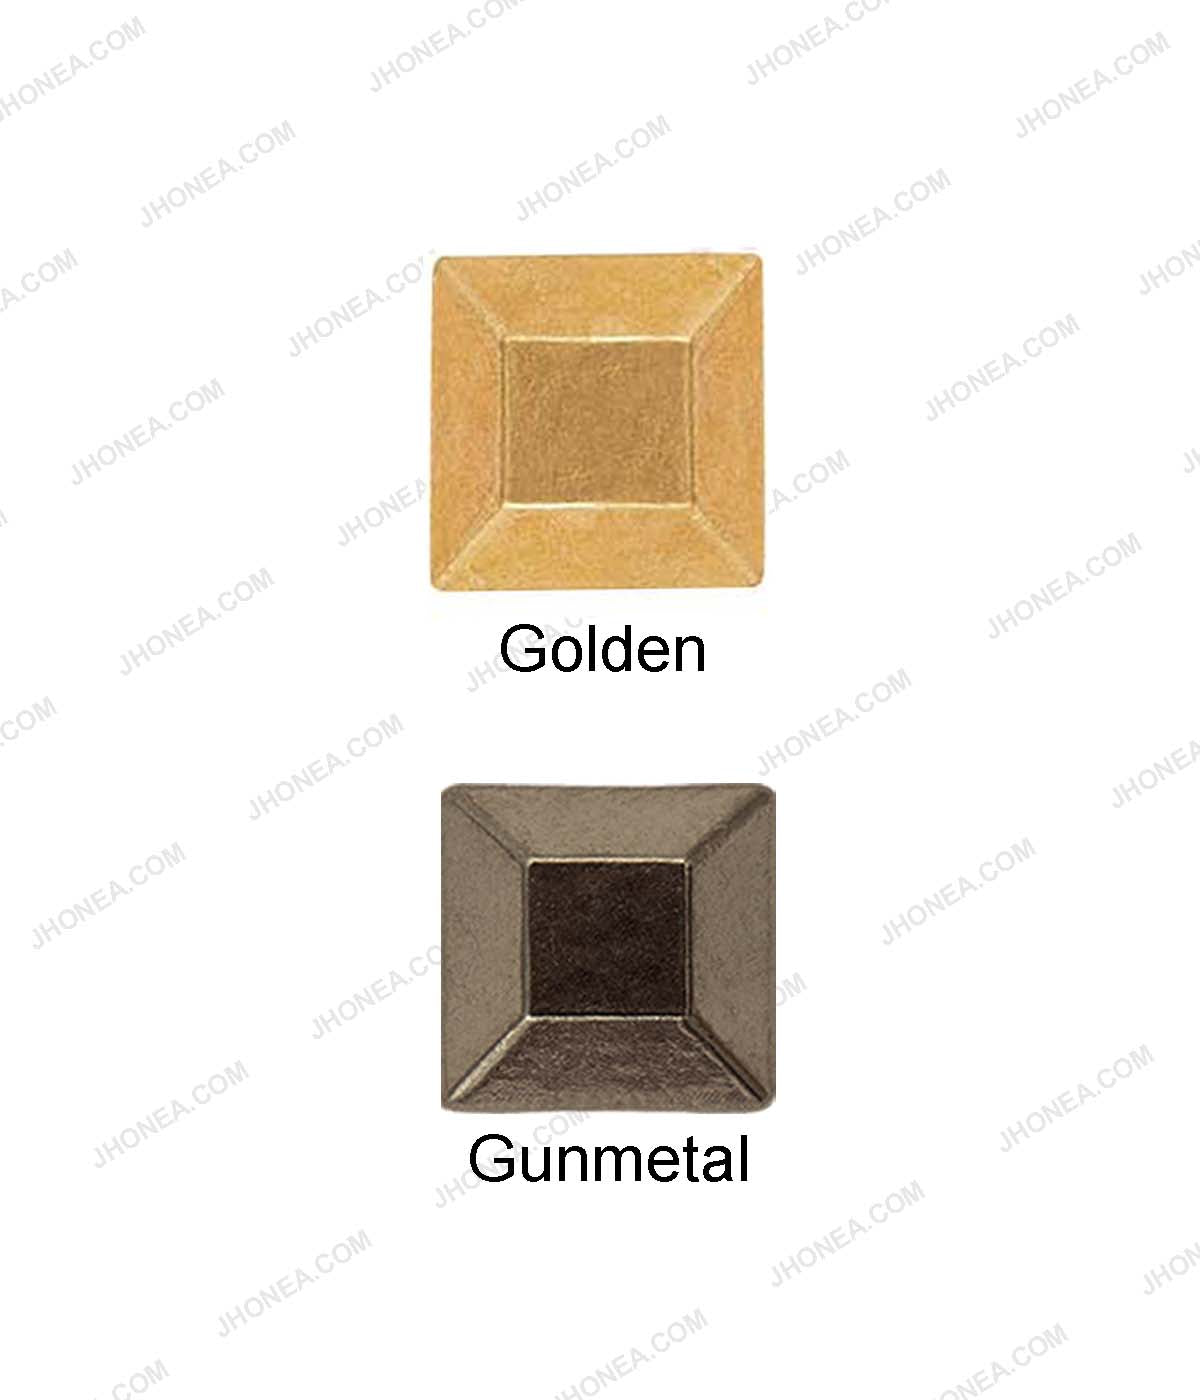 Western Style Square Shape Hotfix Studs in Golden & Gunmetal Color for Blazer Embellishment